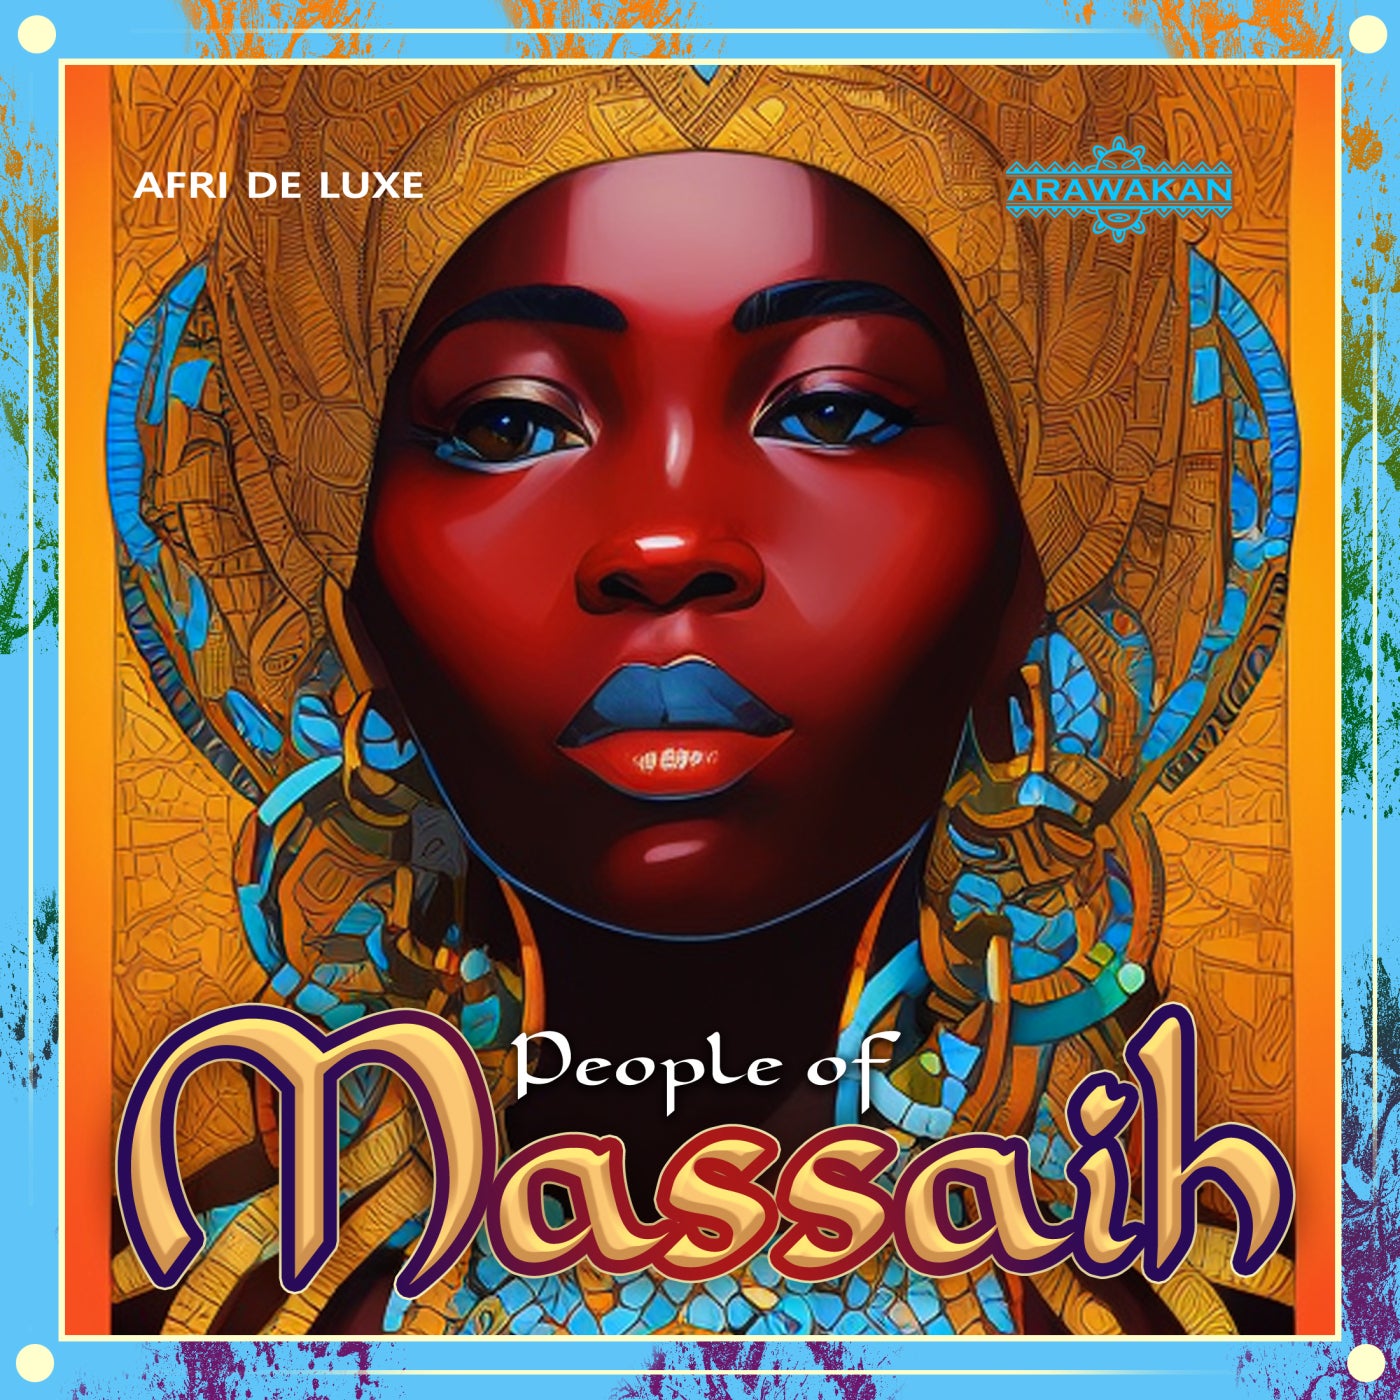 People of Massaih